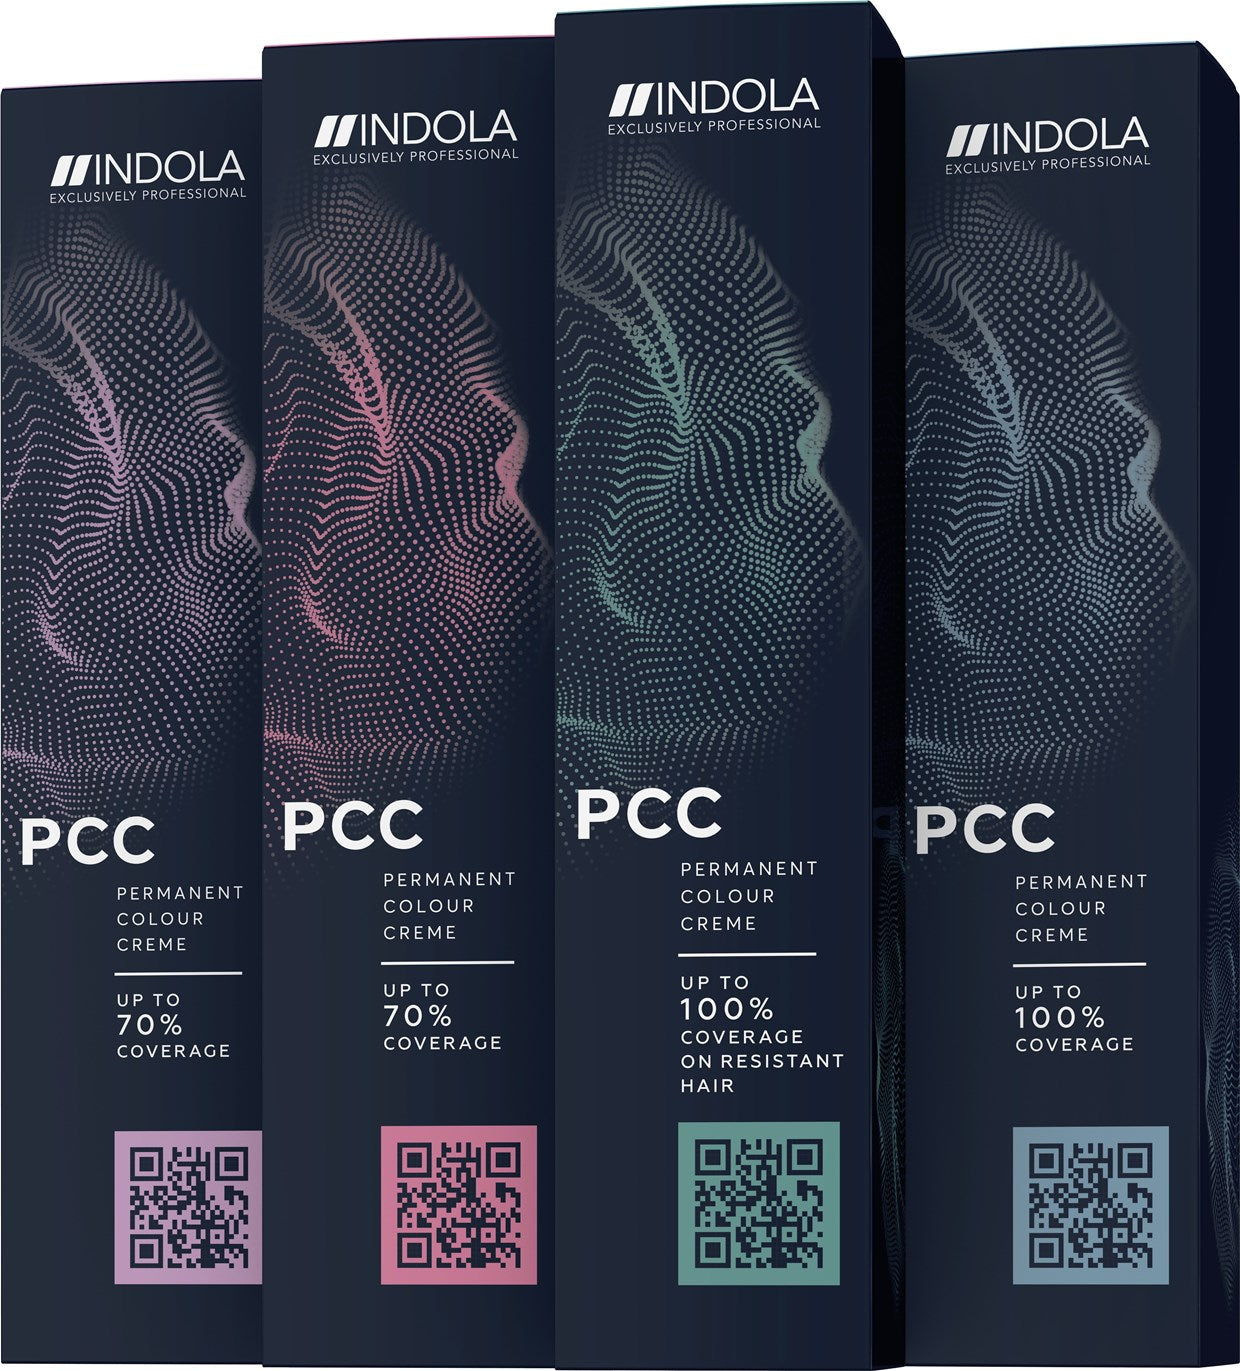 Indola Profession Permanent Caring Color PCC 4.0